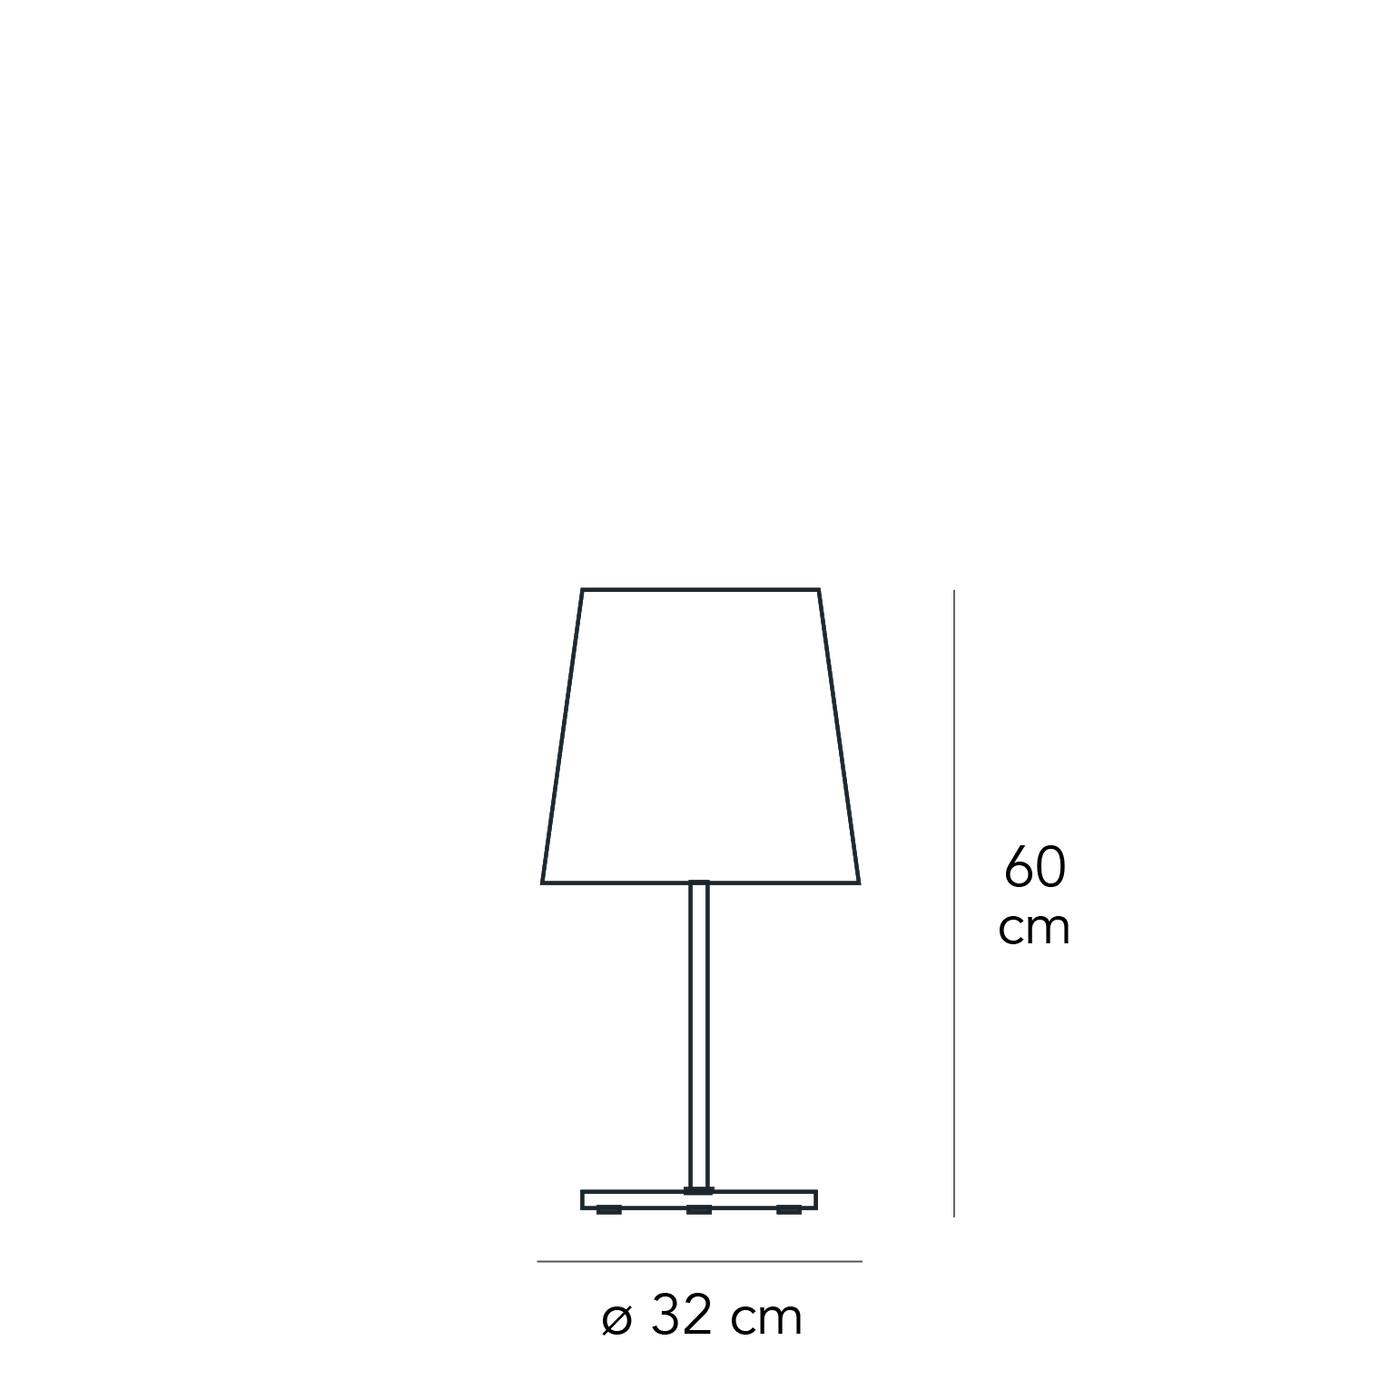 Table Lamp 3247TA Large by FontanaArte Design Lab 05